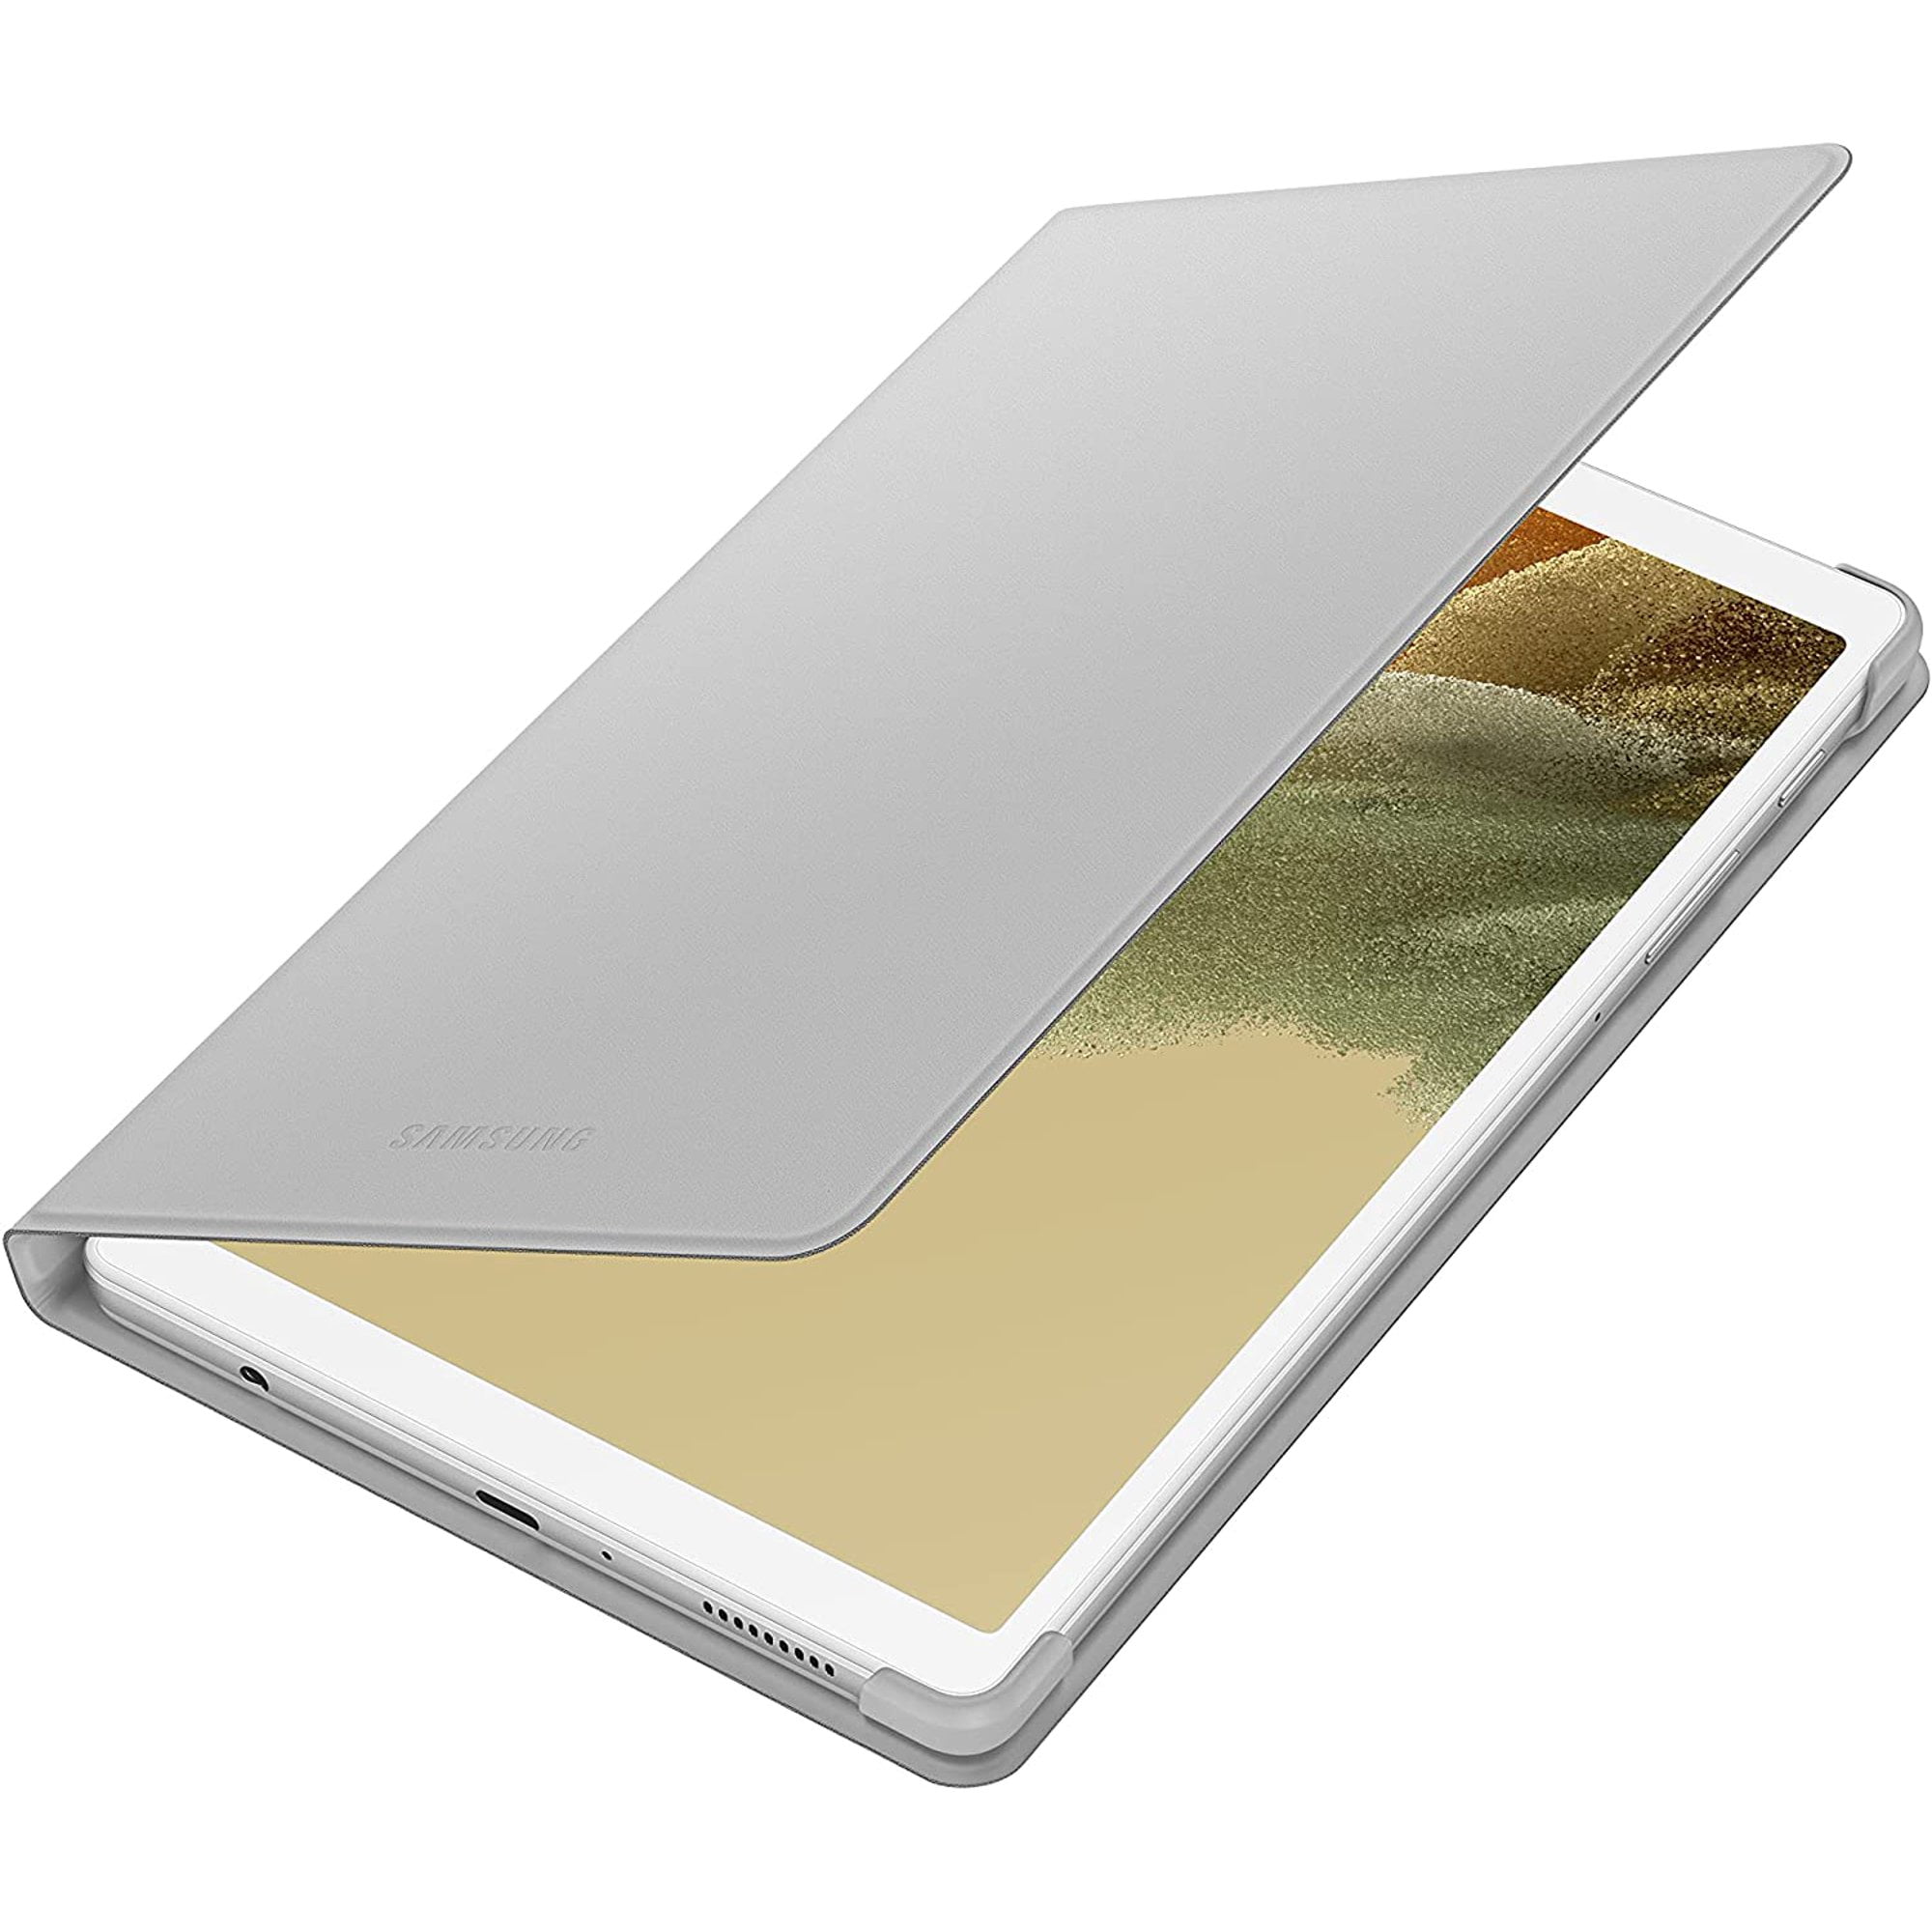 Samsung Galaxy Tab 2 (10.1) reconditionnée à 267,15 € (stocks limités) -  CNET France